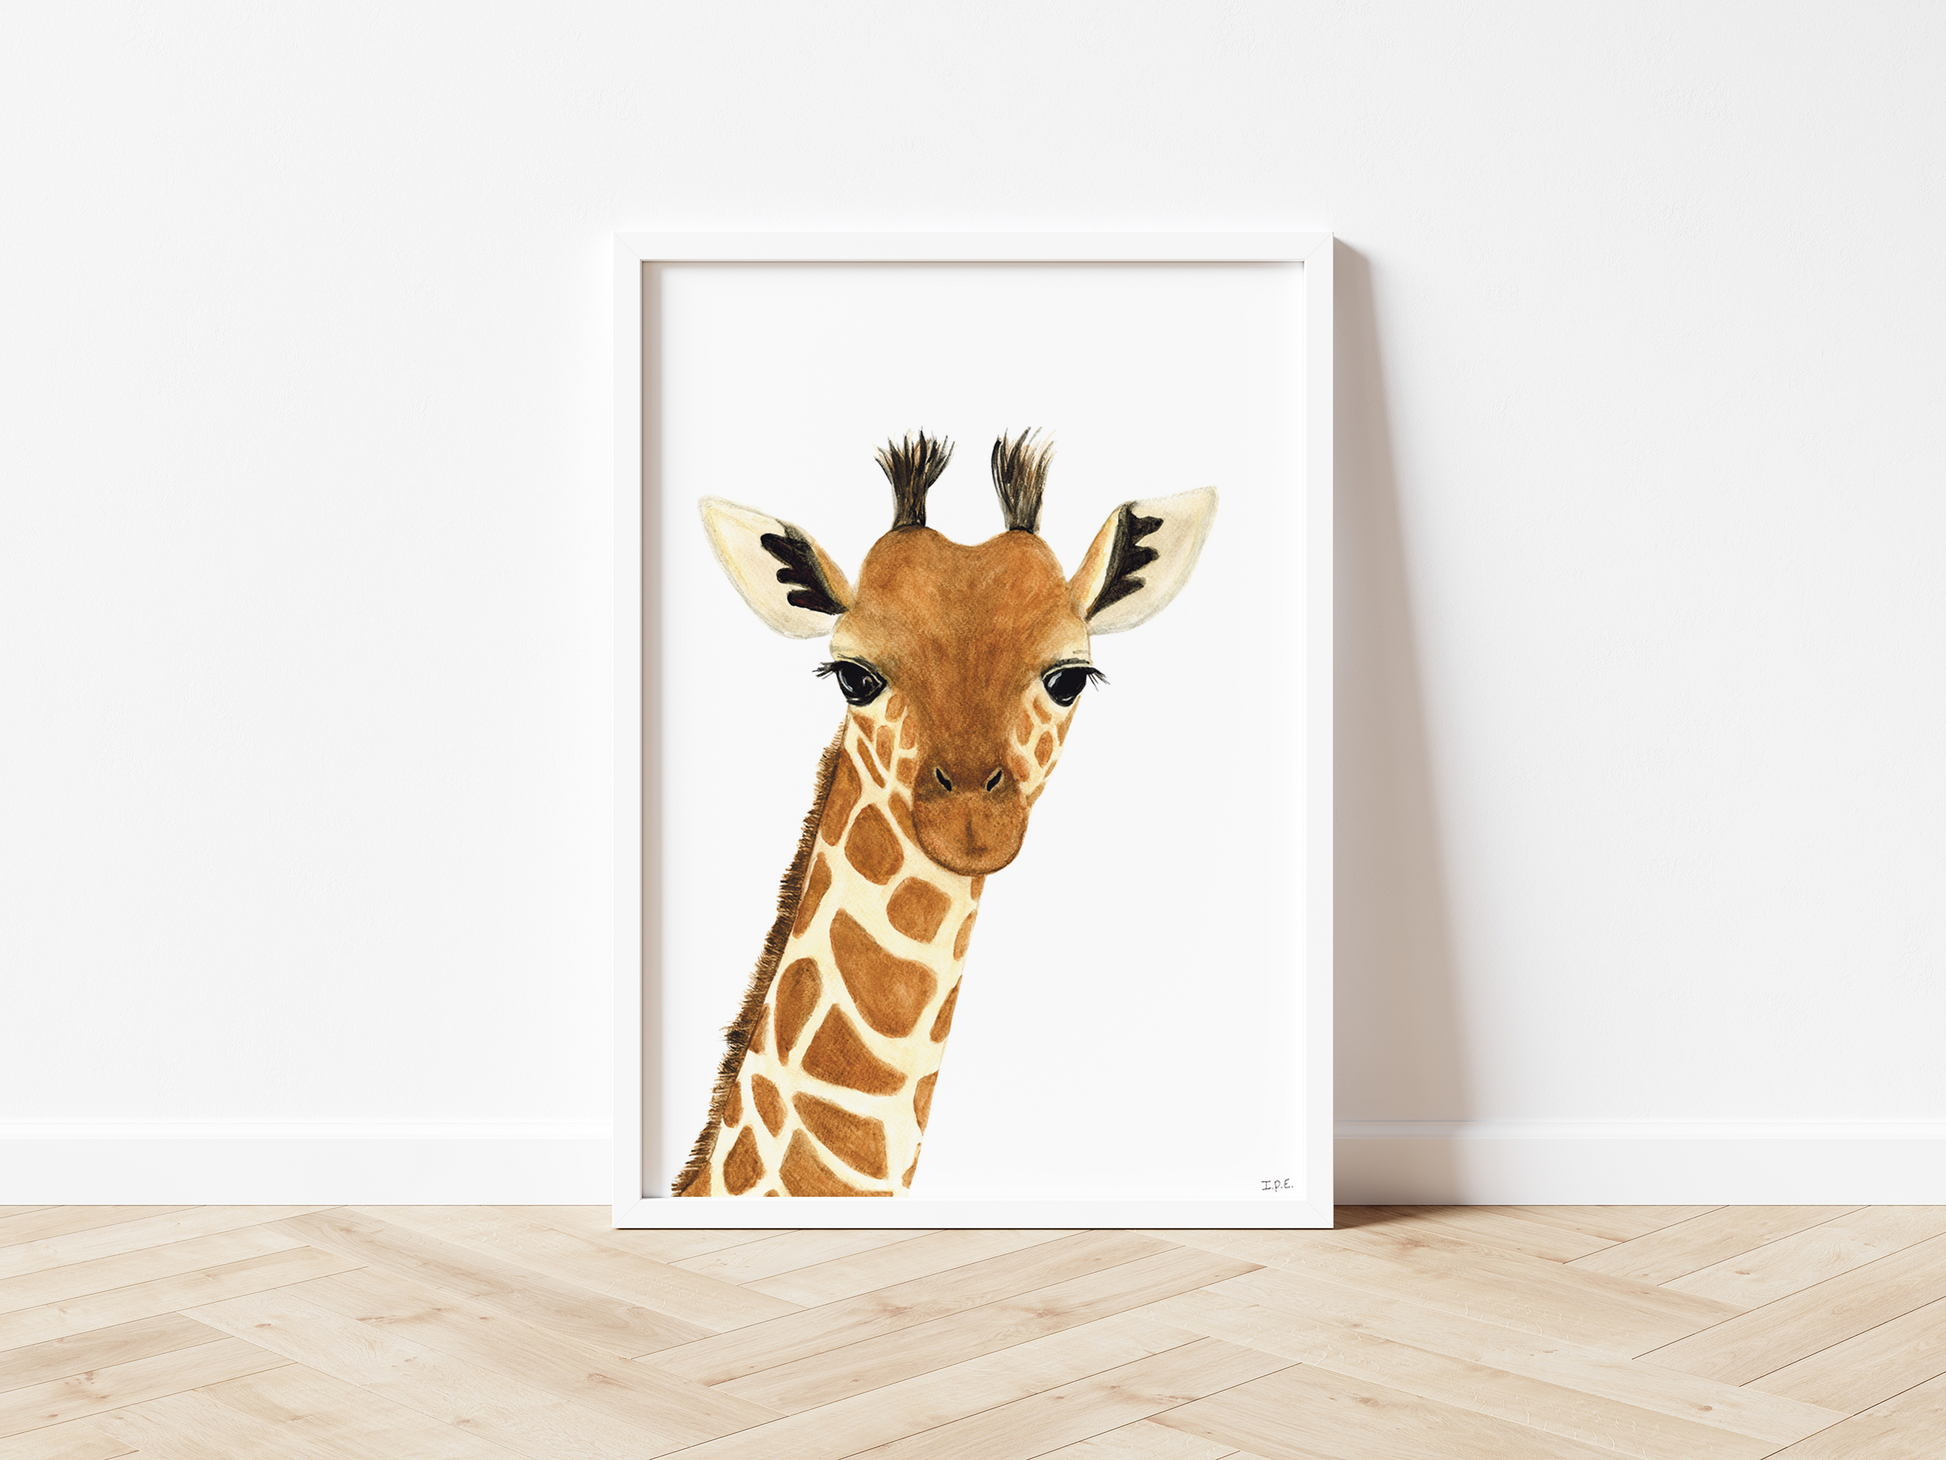 Framed giraffe nursery art on wooden floor